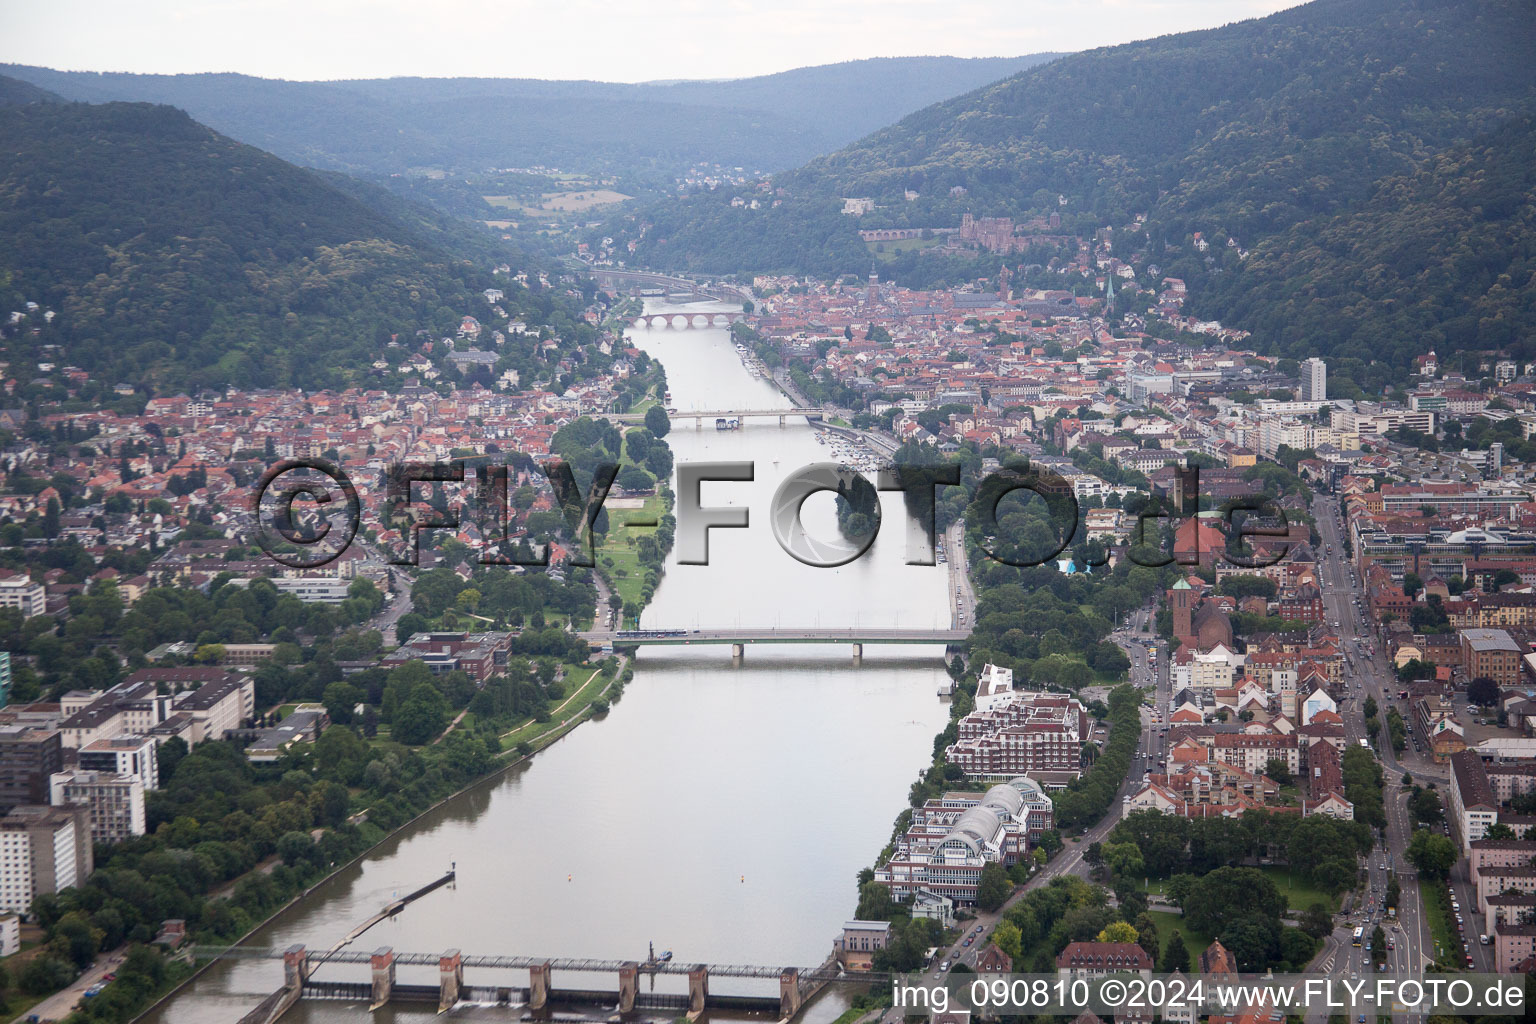 Aerial view of Neckar and Neuenheim in the district Neuenheim in Heidelberg in the state Baden-Wuerttemberg, Germany